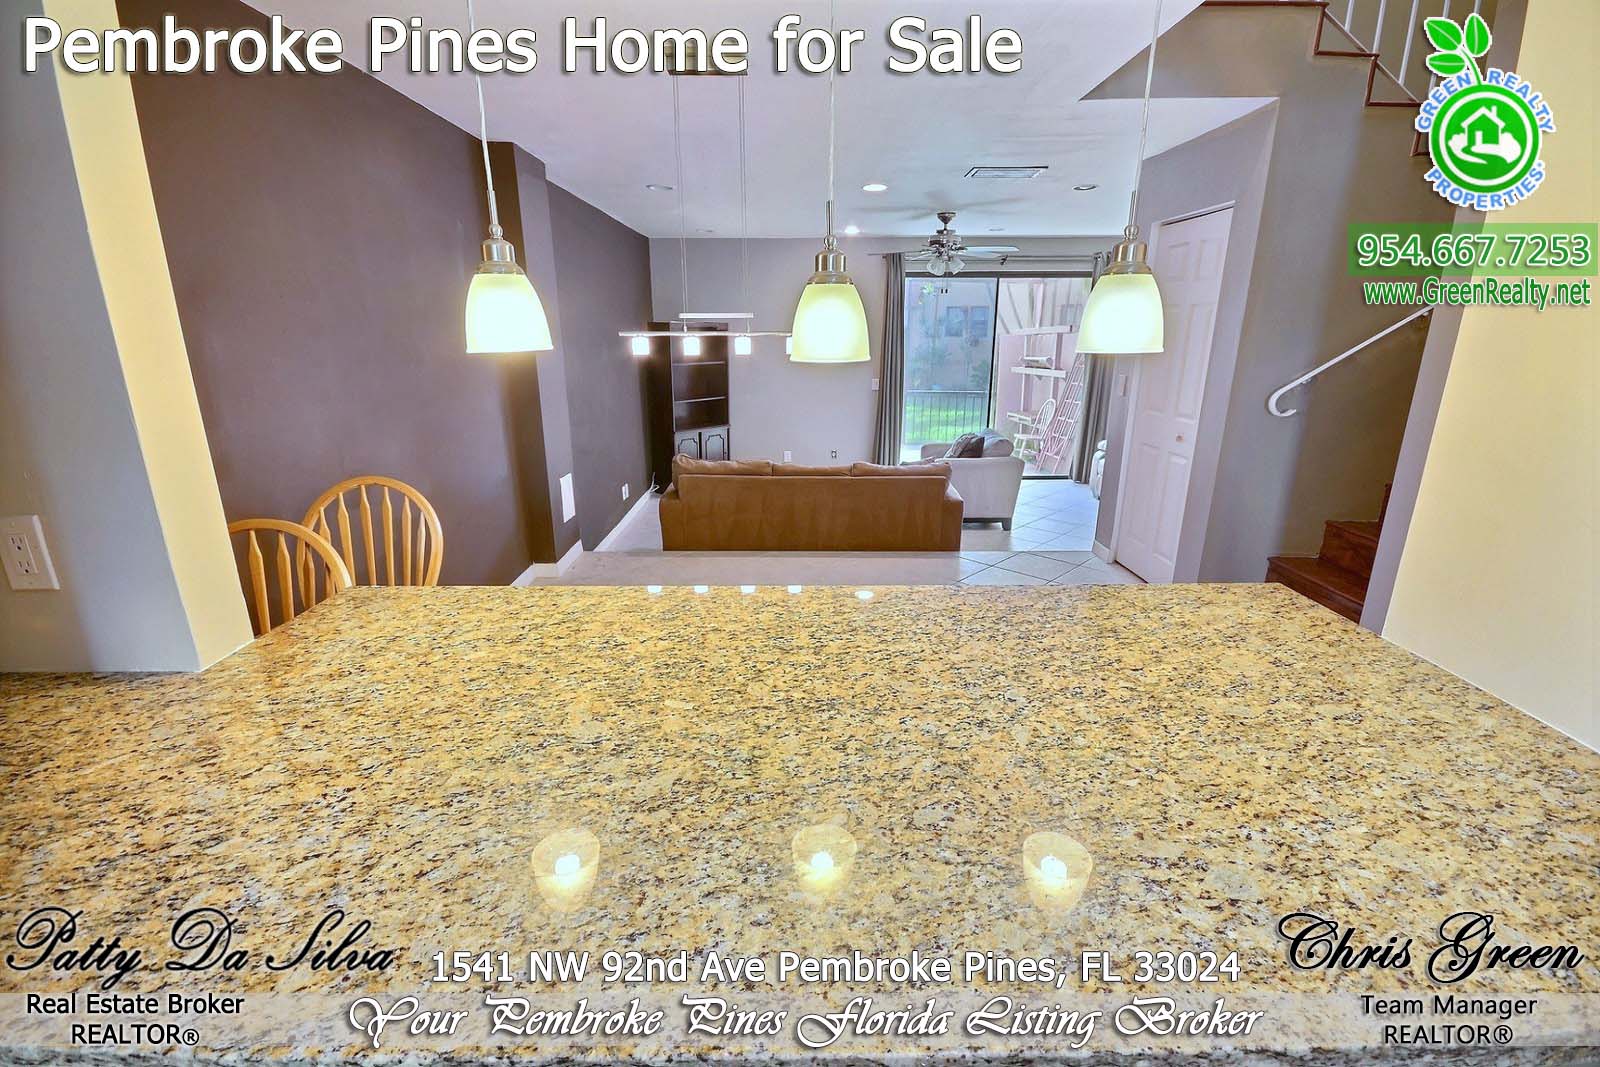 Pembroke Pines Real Estate Agents